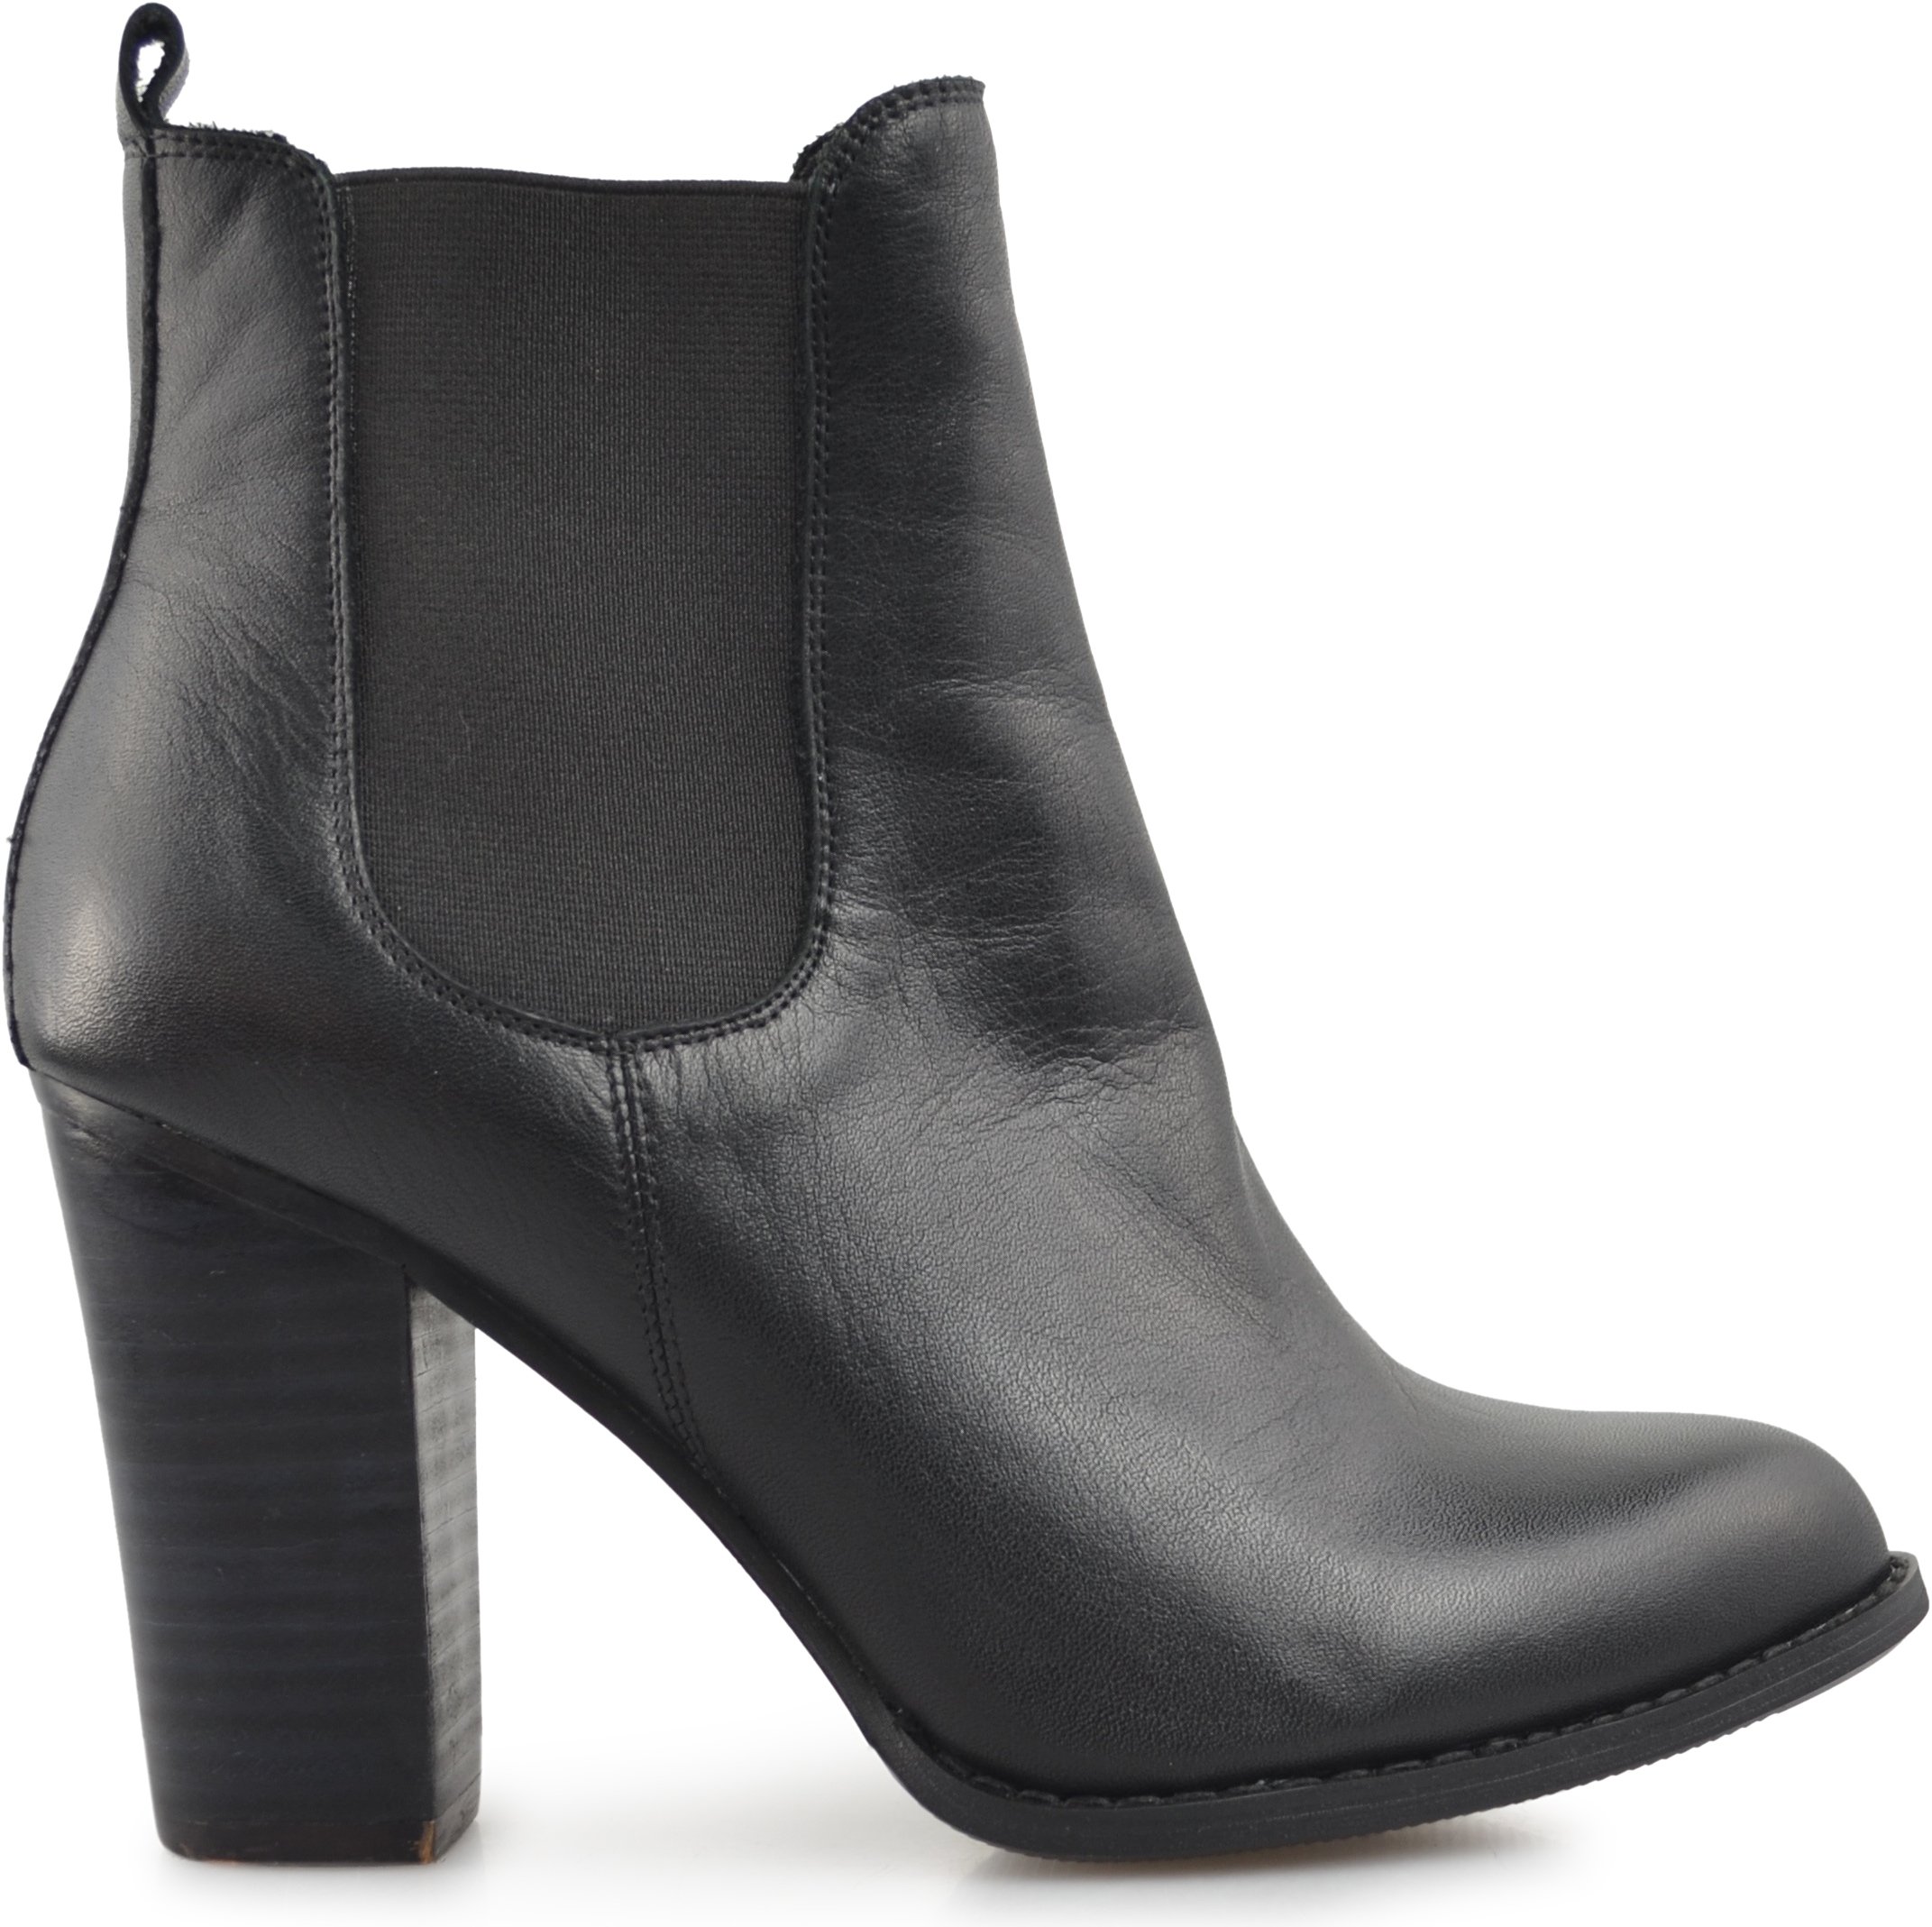 APPLE2-BLACK - Traffic Footwear Women Shoes Collection - Boston Babe